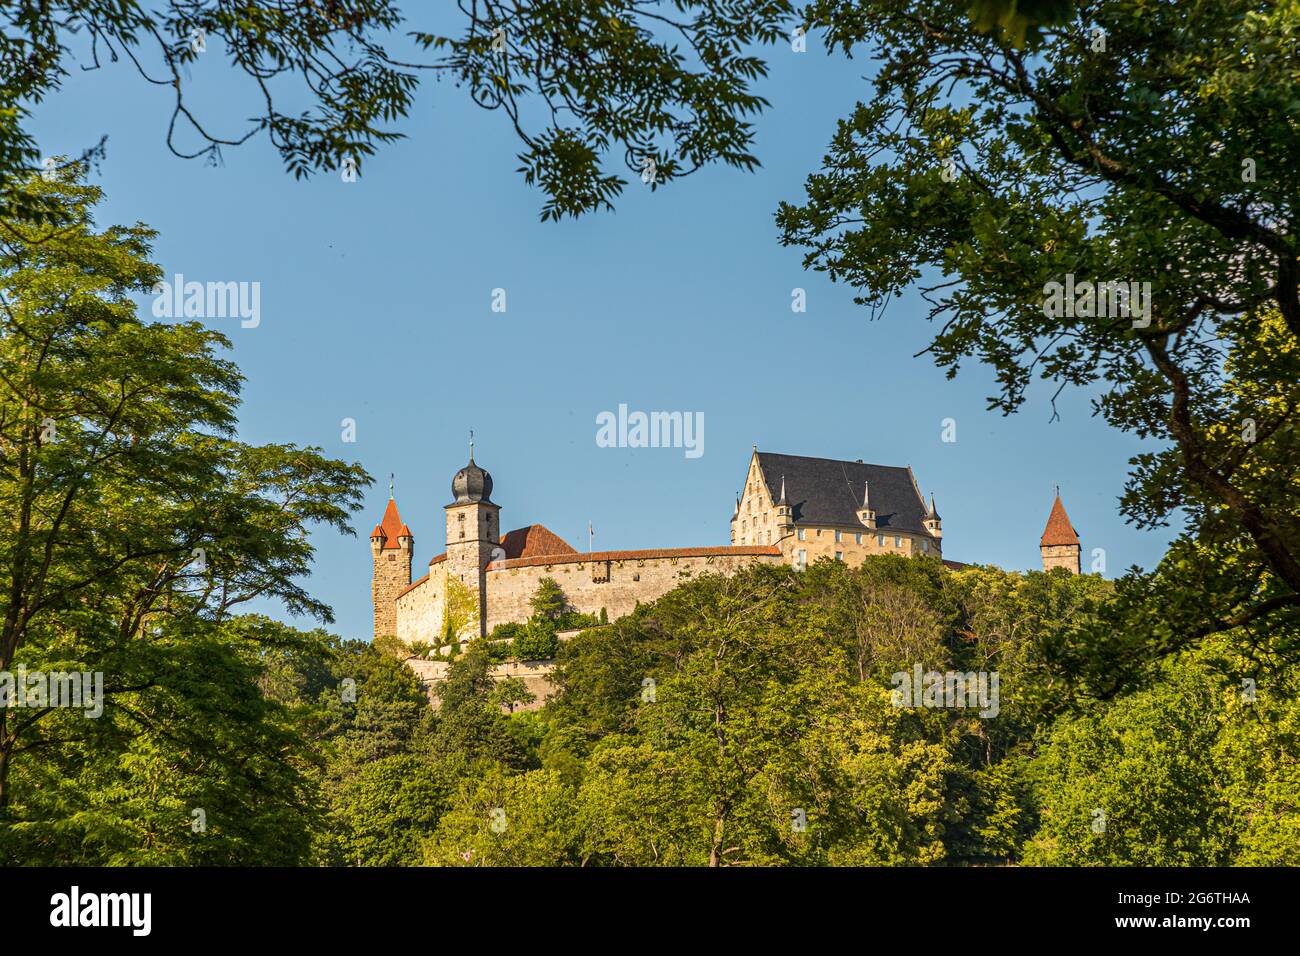 Veste Coburg (Coburg Fortress), Germany Stock Photo